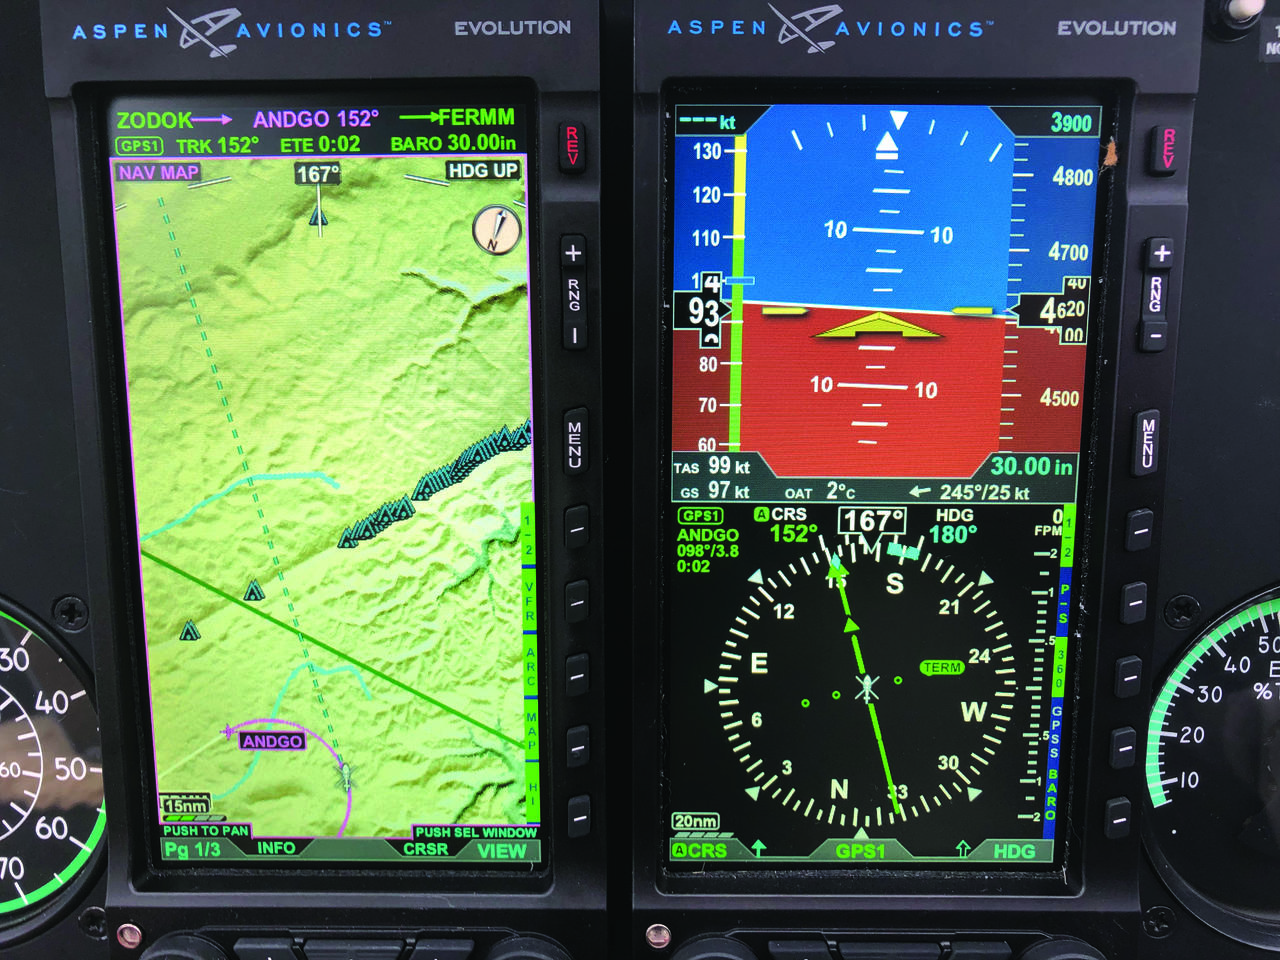 air navigation services provider